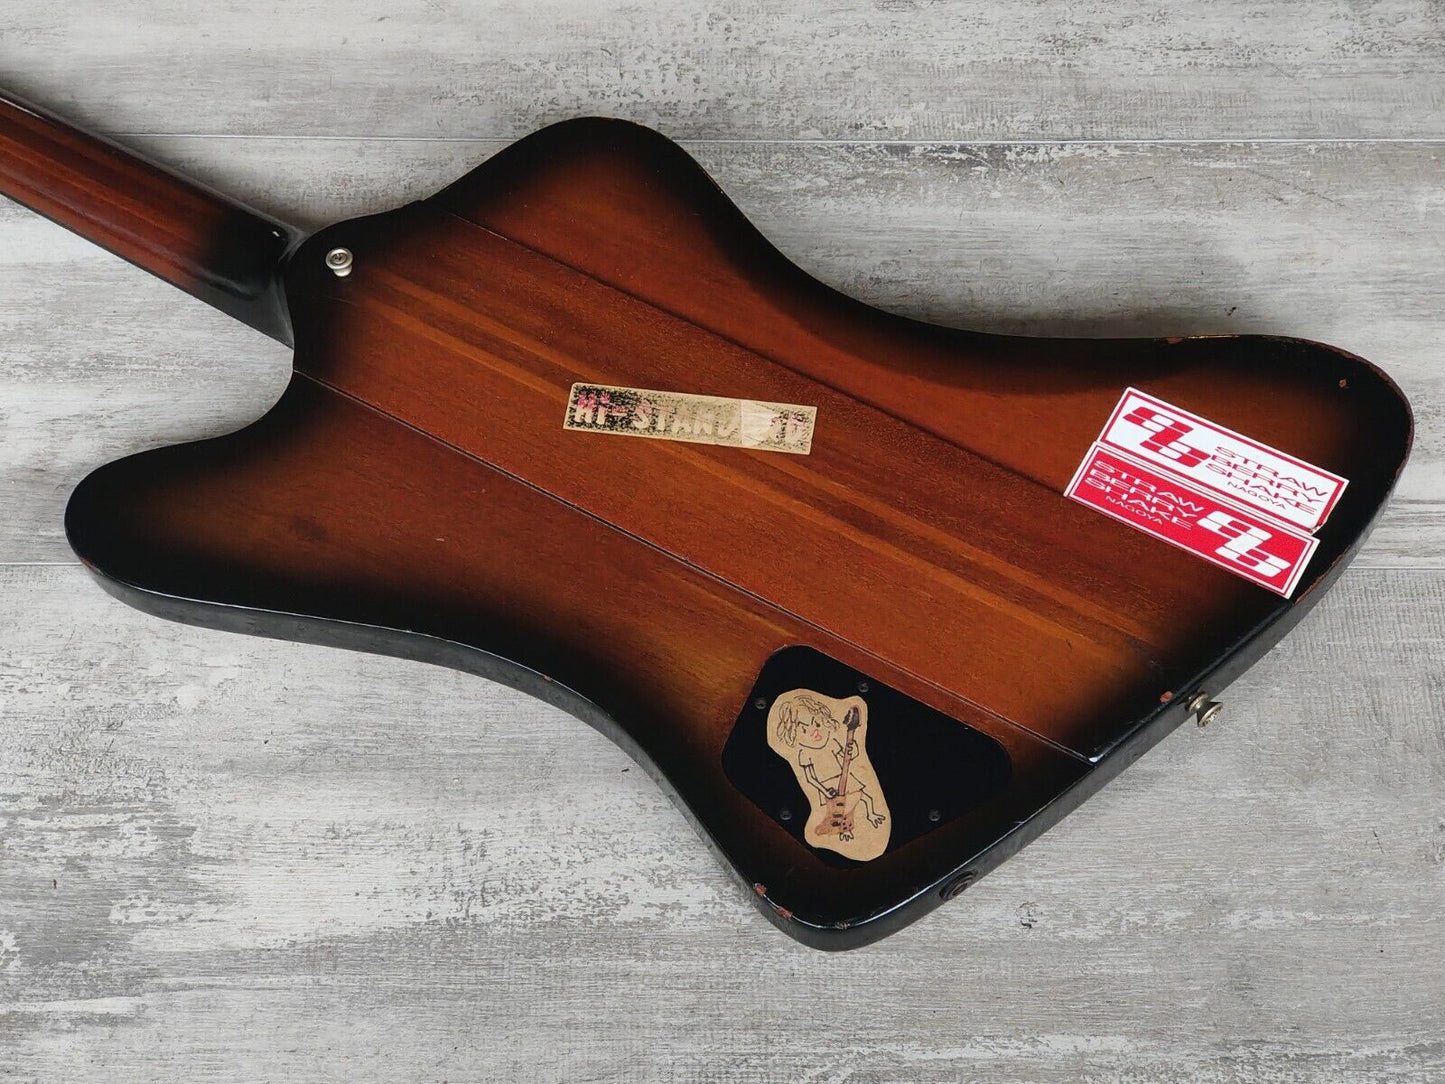 1990 Gibson USA Thunderbird IV Neckthrough Bass (Vintage Brown Sunburst)